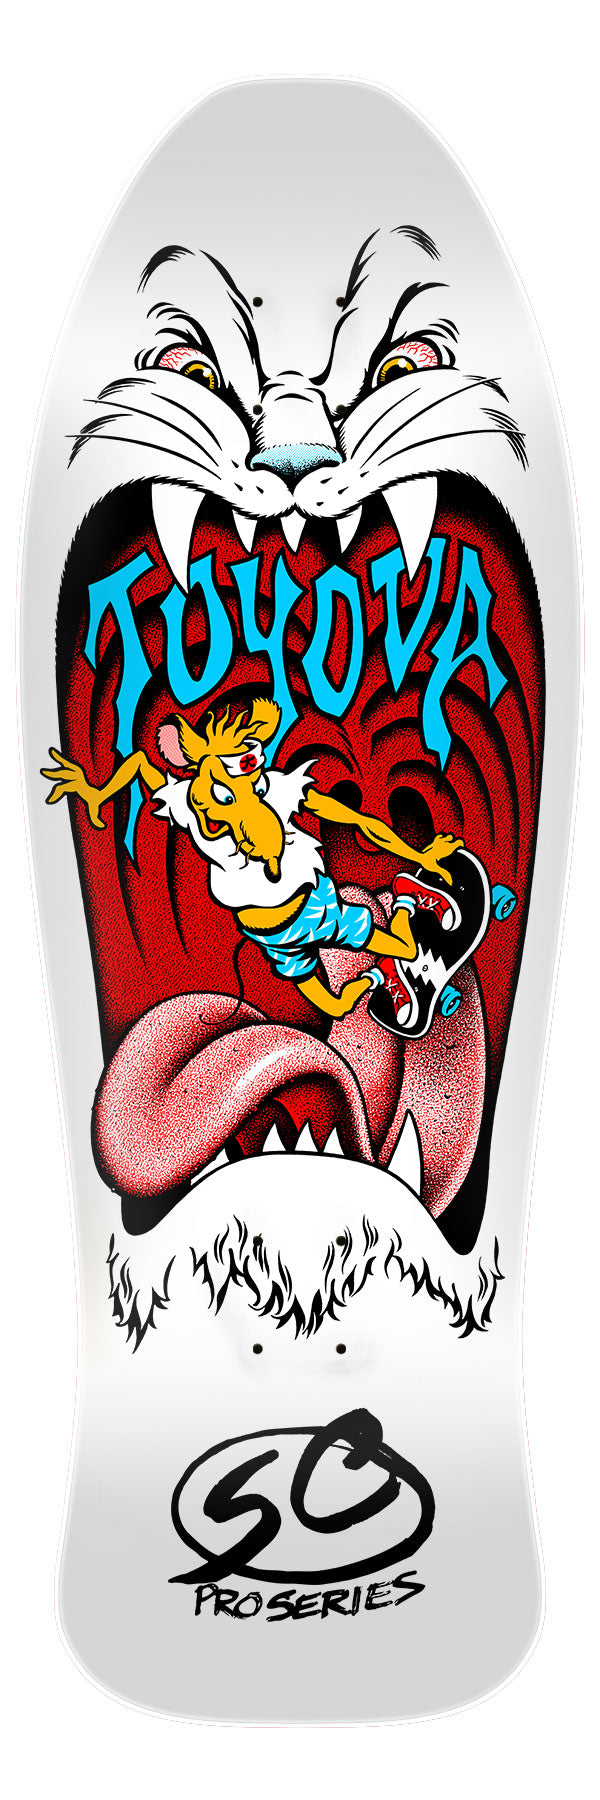 *** PRE-ORDER *** Santa Cruz Toyoda Reissue Skateboard Deck 10.35in x 31.19in